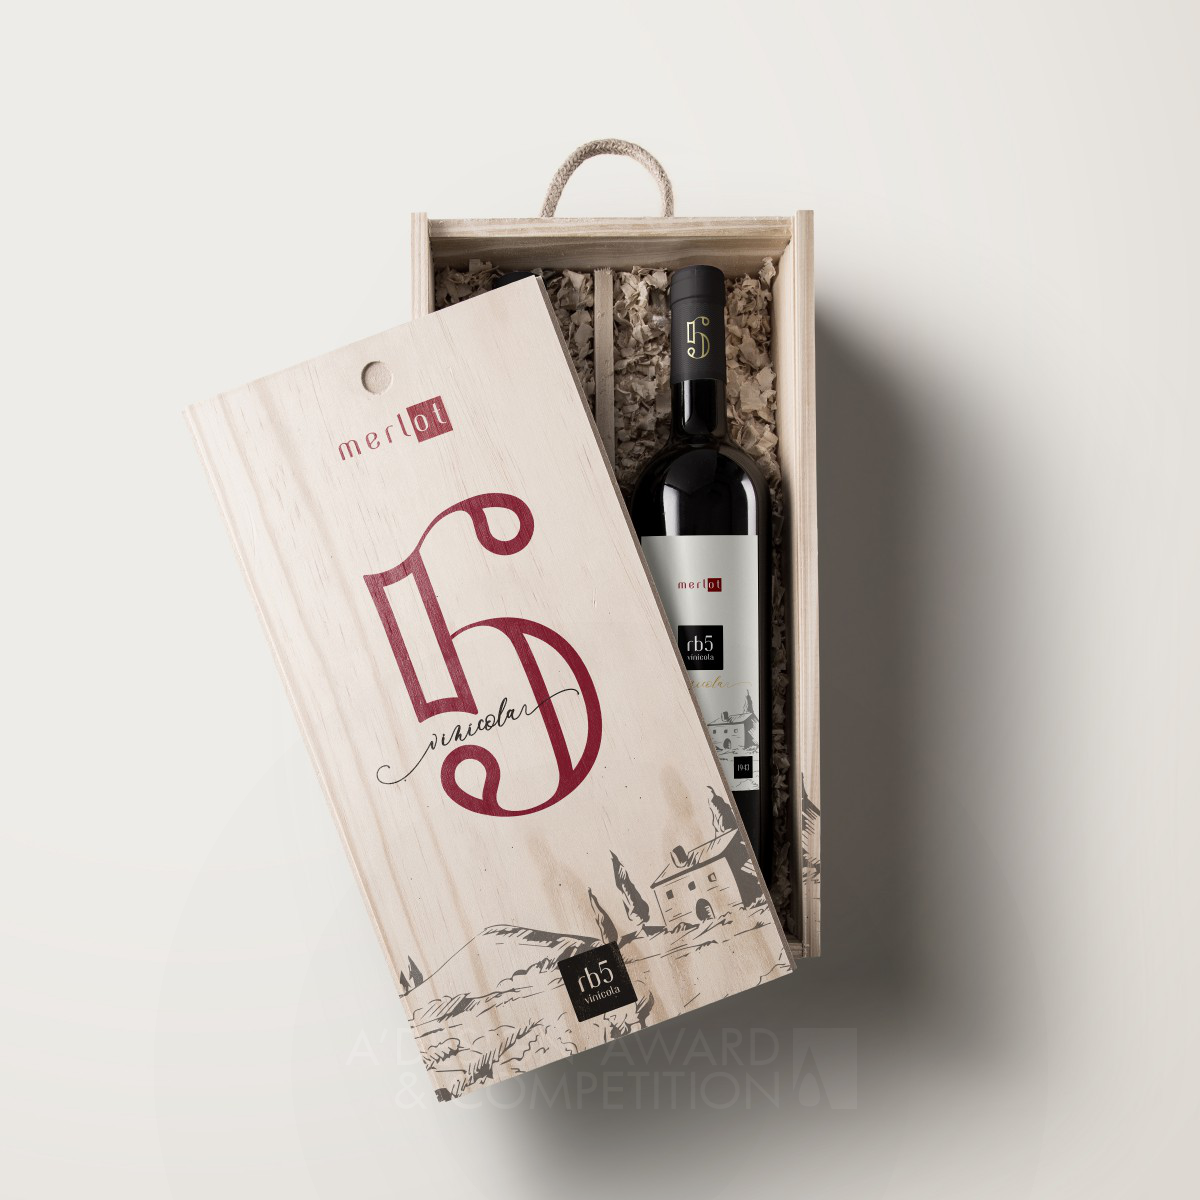 Rb5 Vinicola Visual Identity by Victor Weiss Bronze Packaging Design Award Winner 2020 